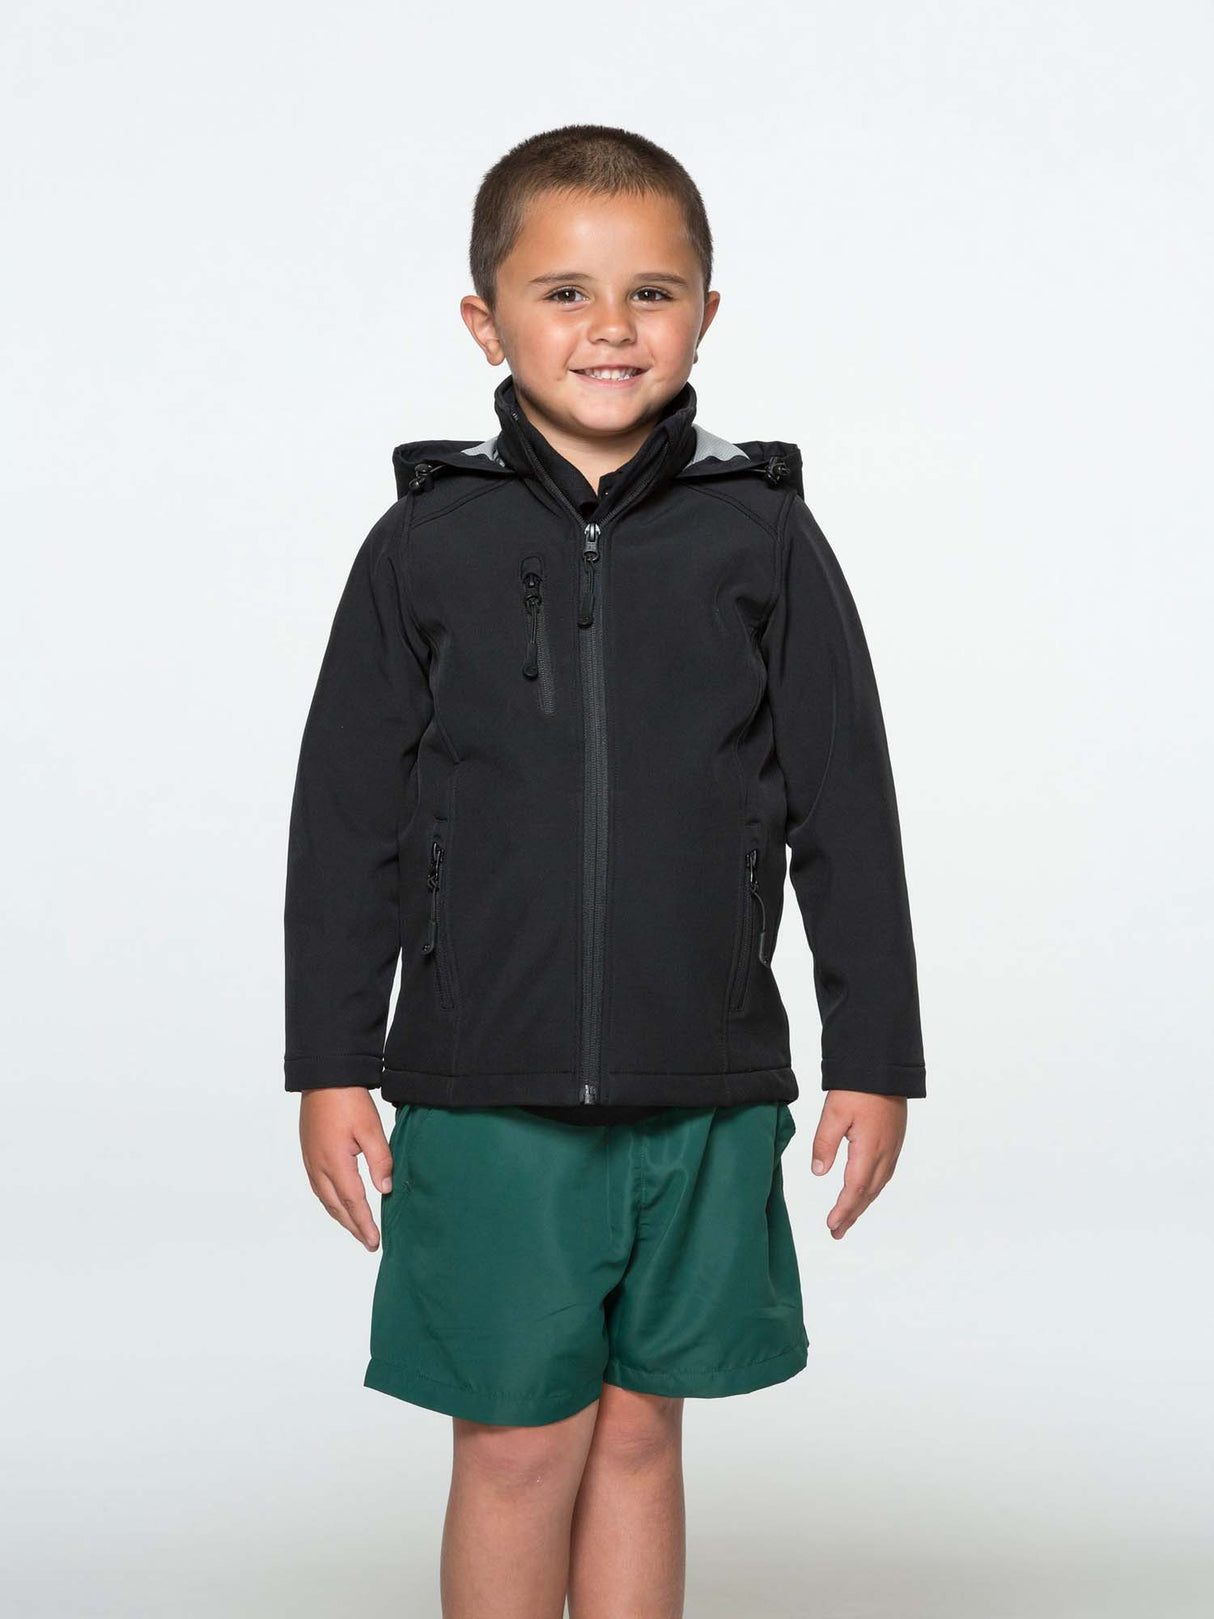 Aussie Pacific Olympus Kids Jackets | ASP-3513 | Seamstop